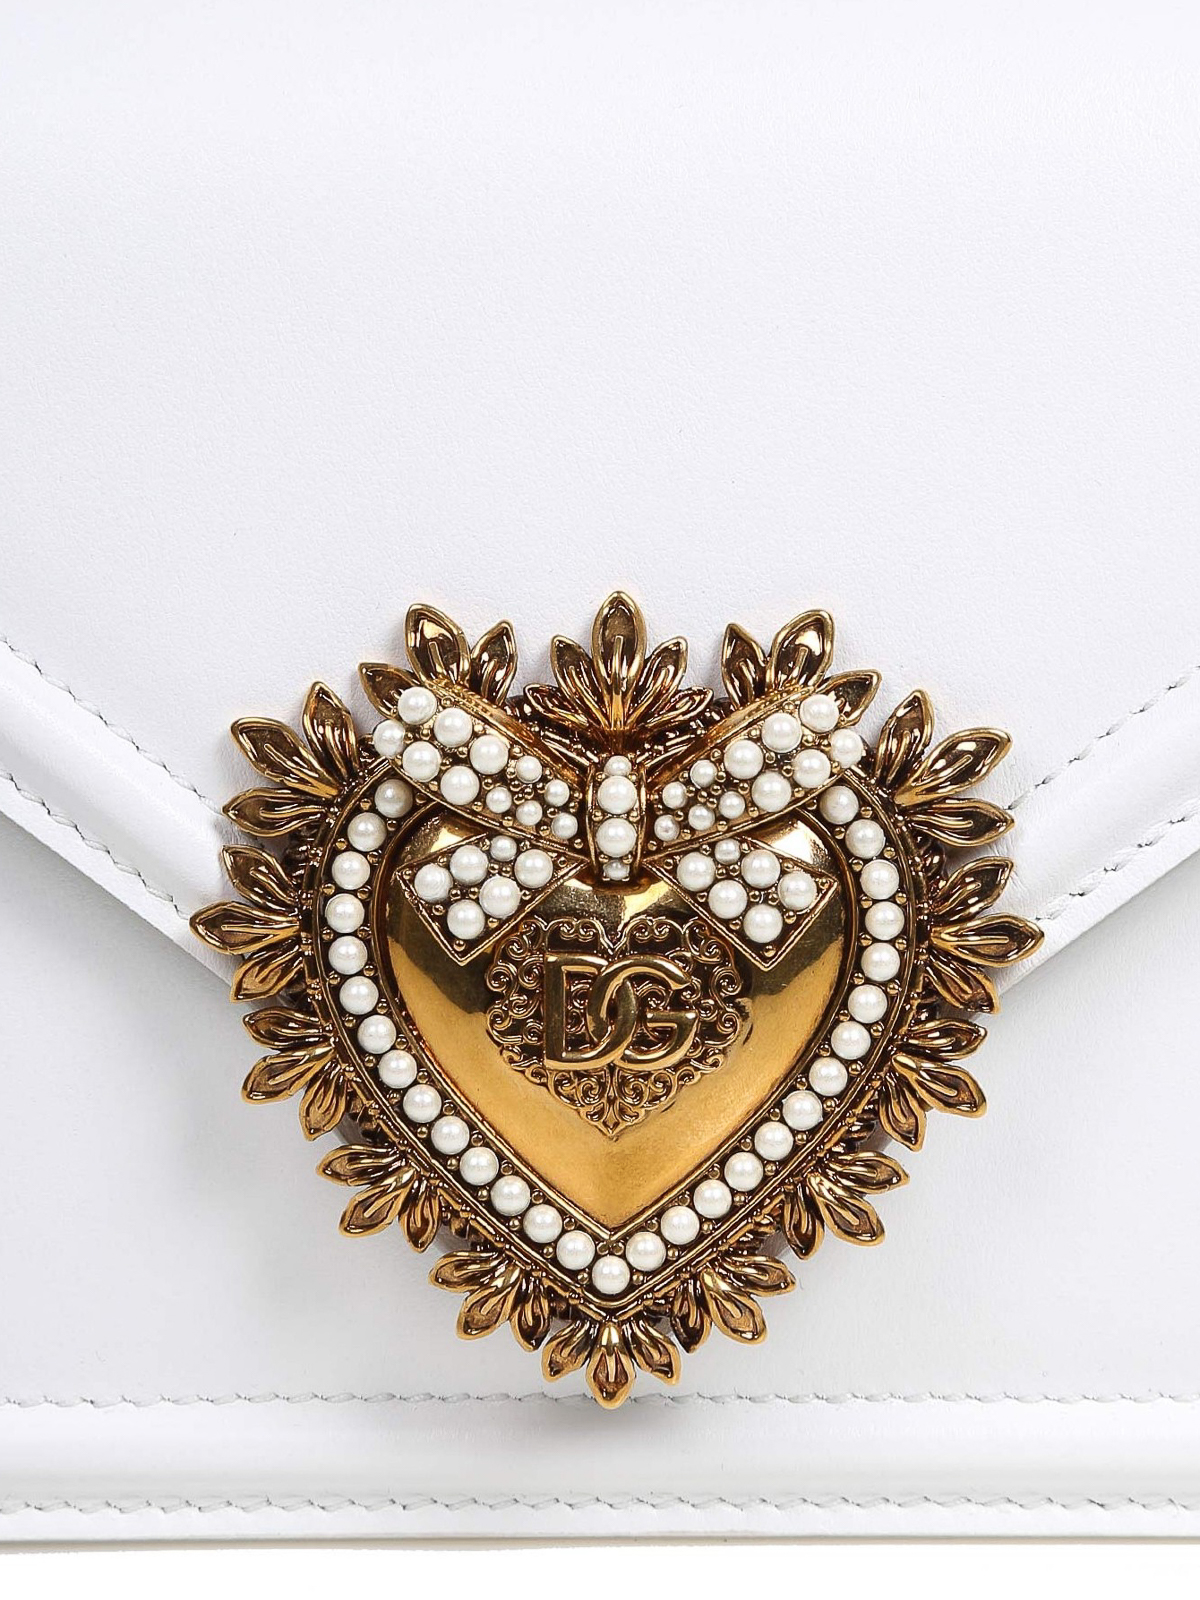 Shop Dolce & Gabbana Bolsa Bandolera - Devotion S In White